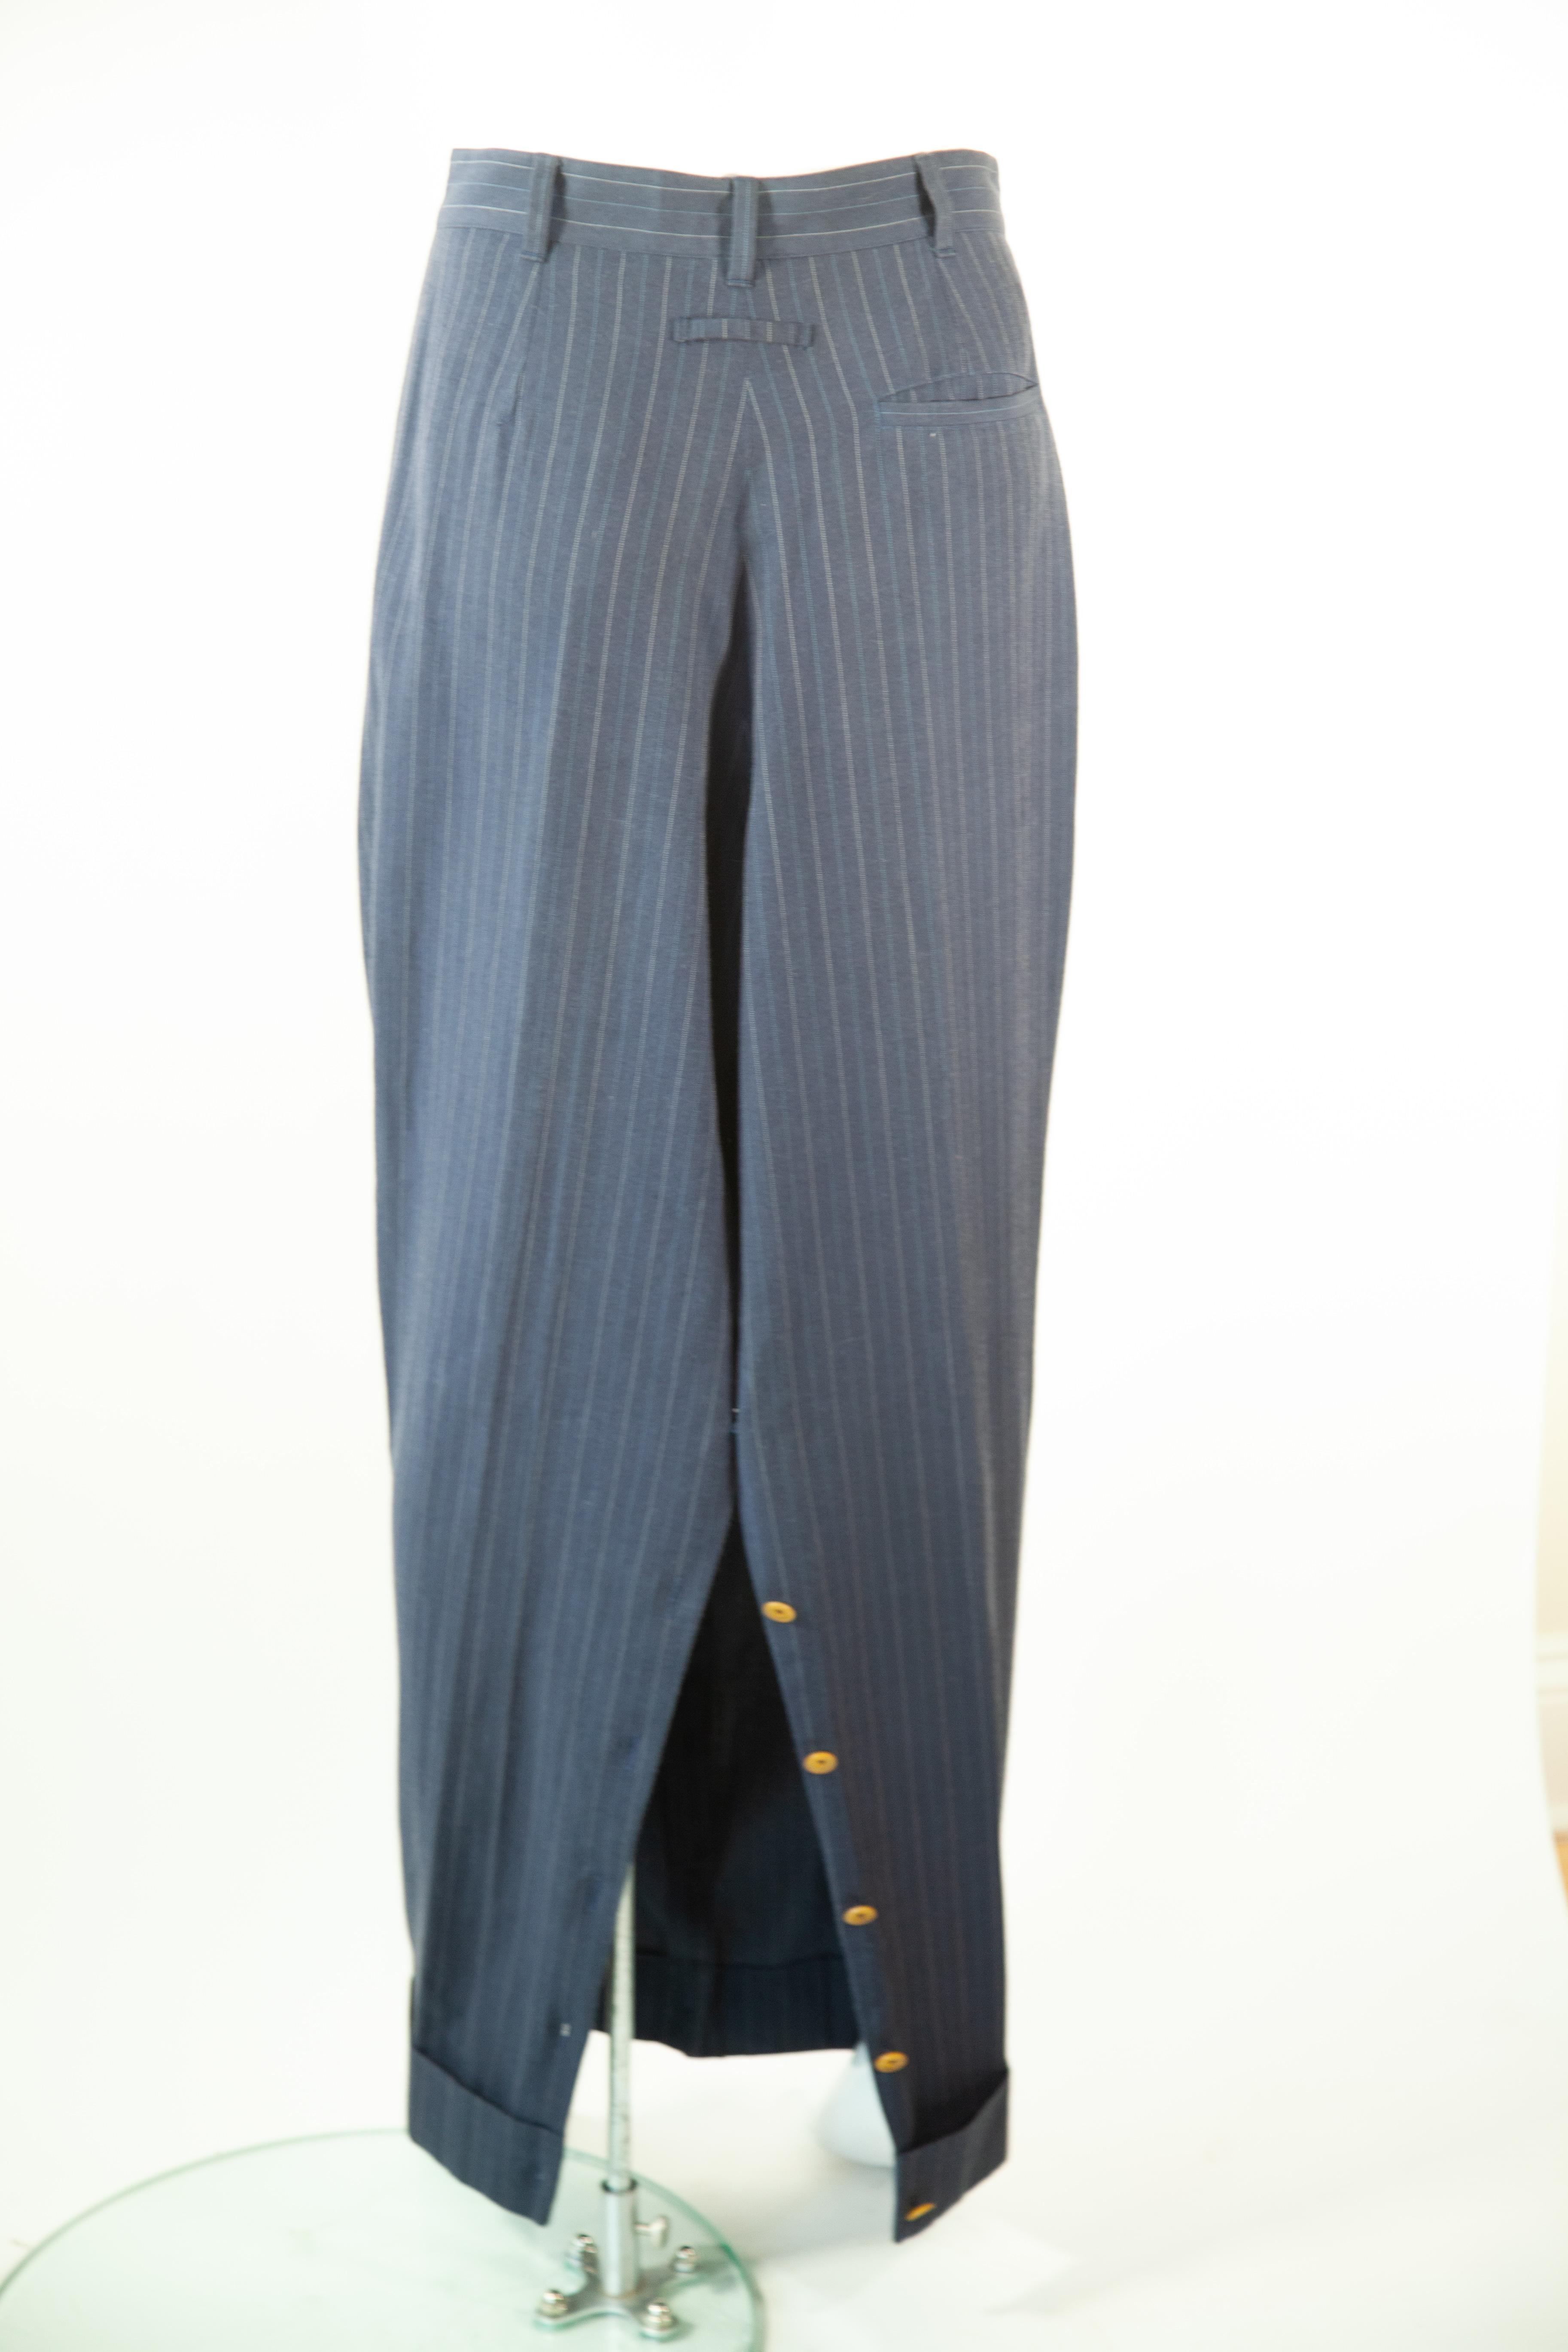 Jean Paul Gaultier Femme Multi-Functional Pants/Skirt 3